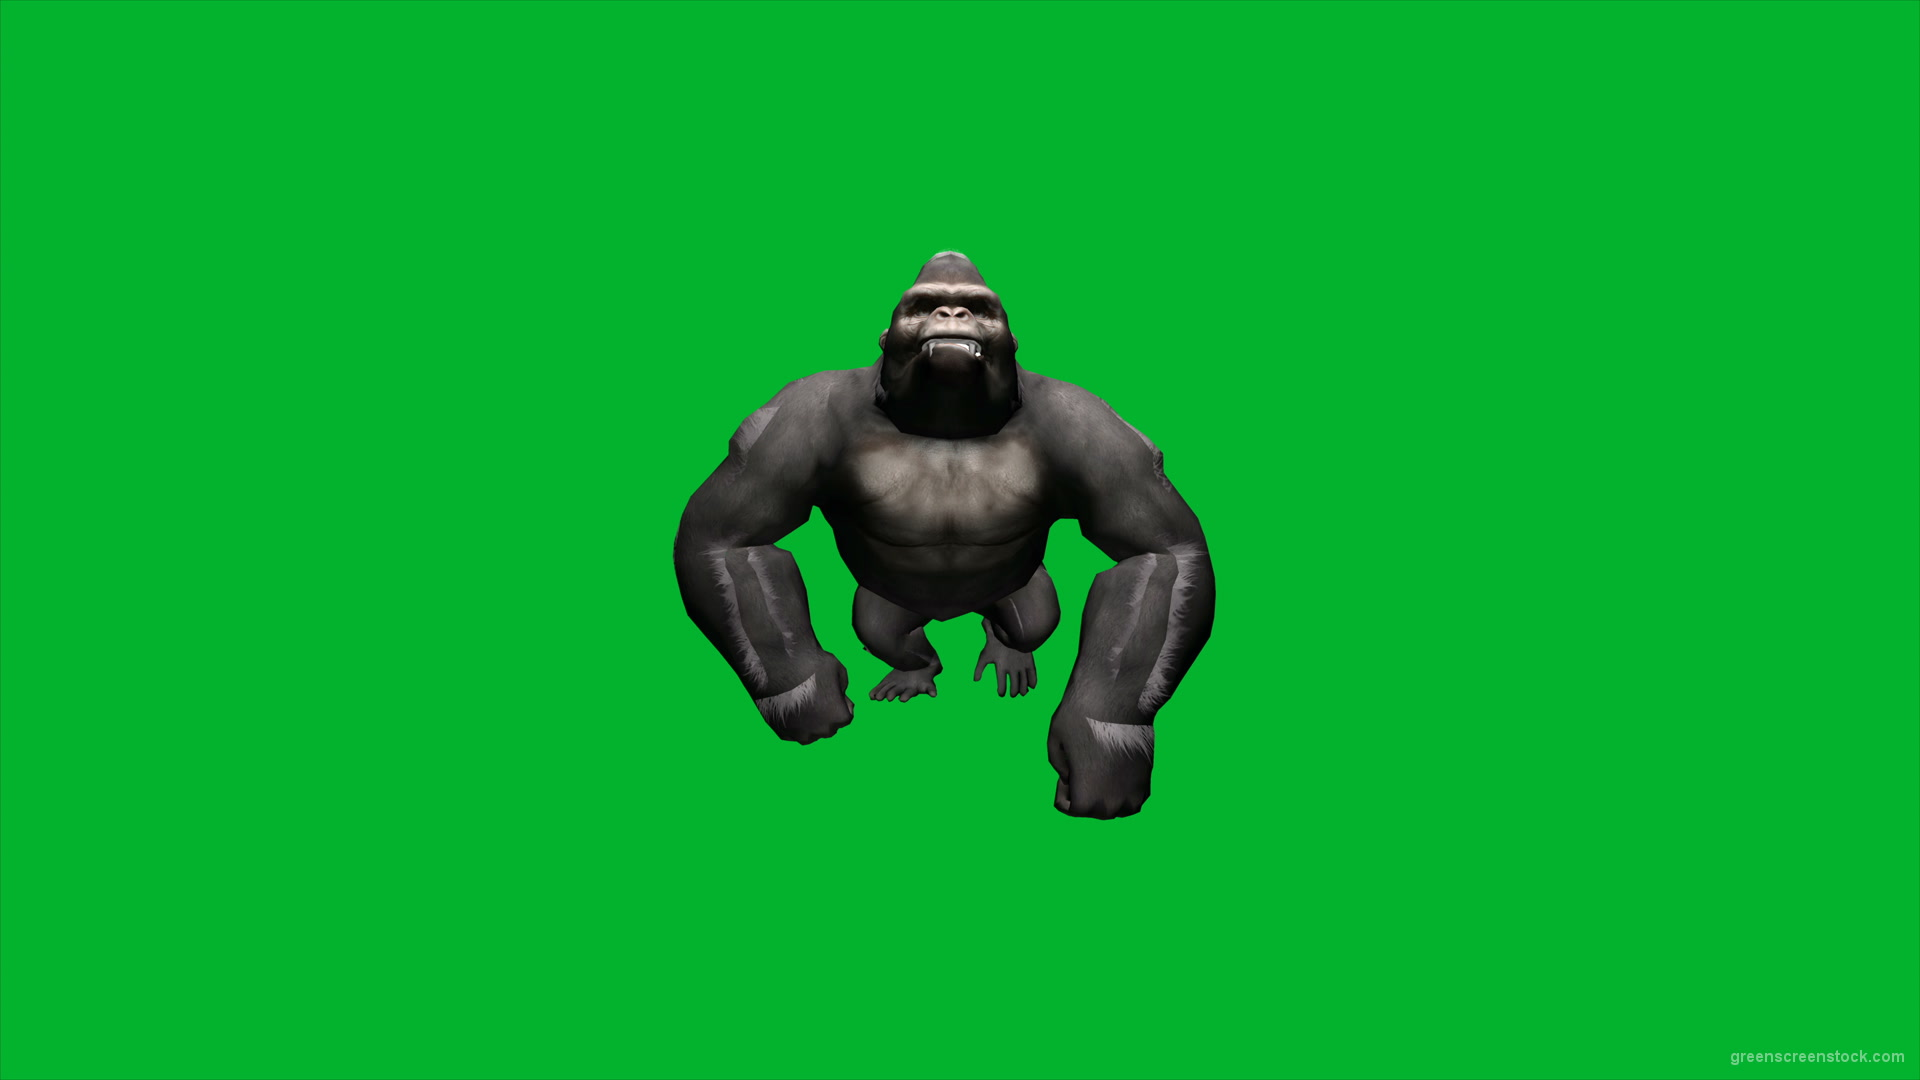 Gorilla Move - Green Screen Footage — Green Screen Stock